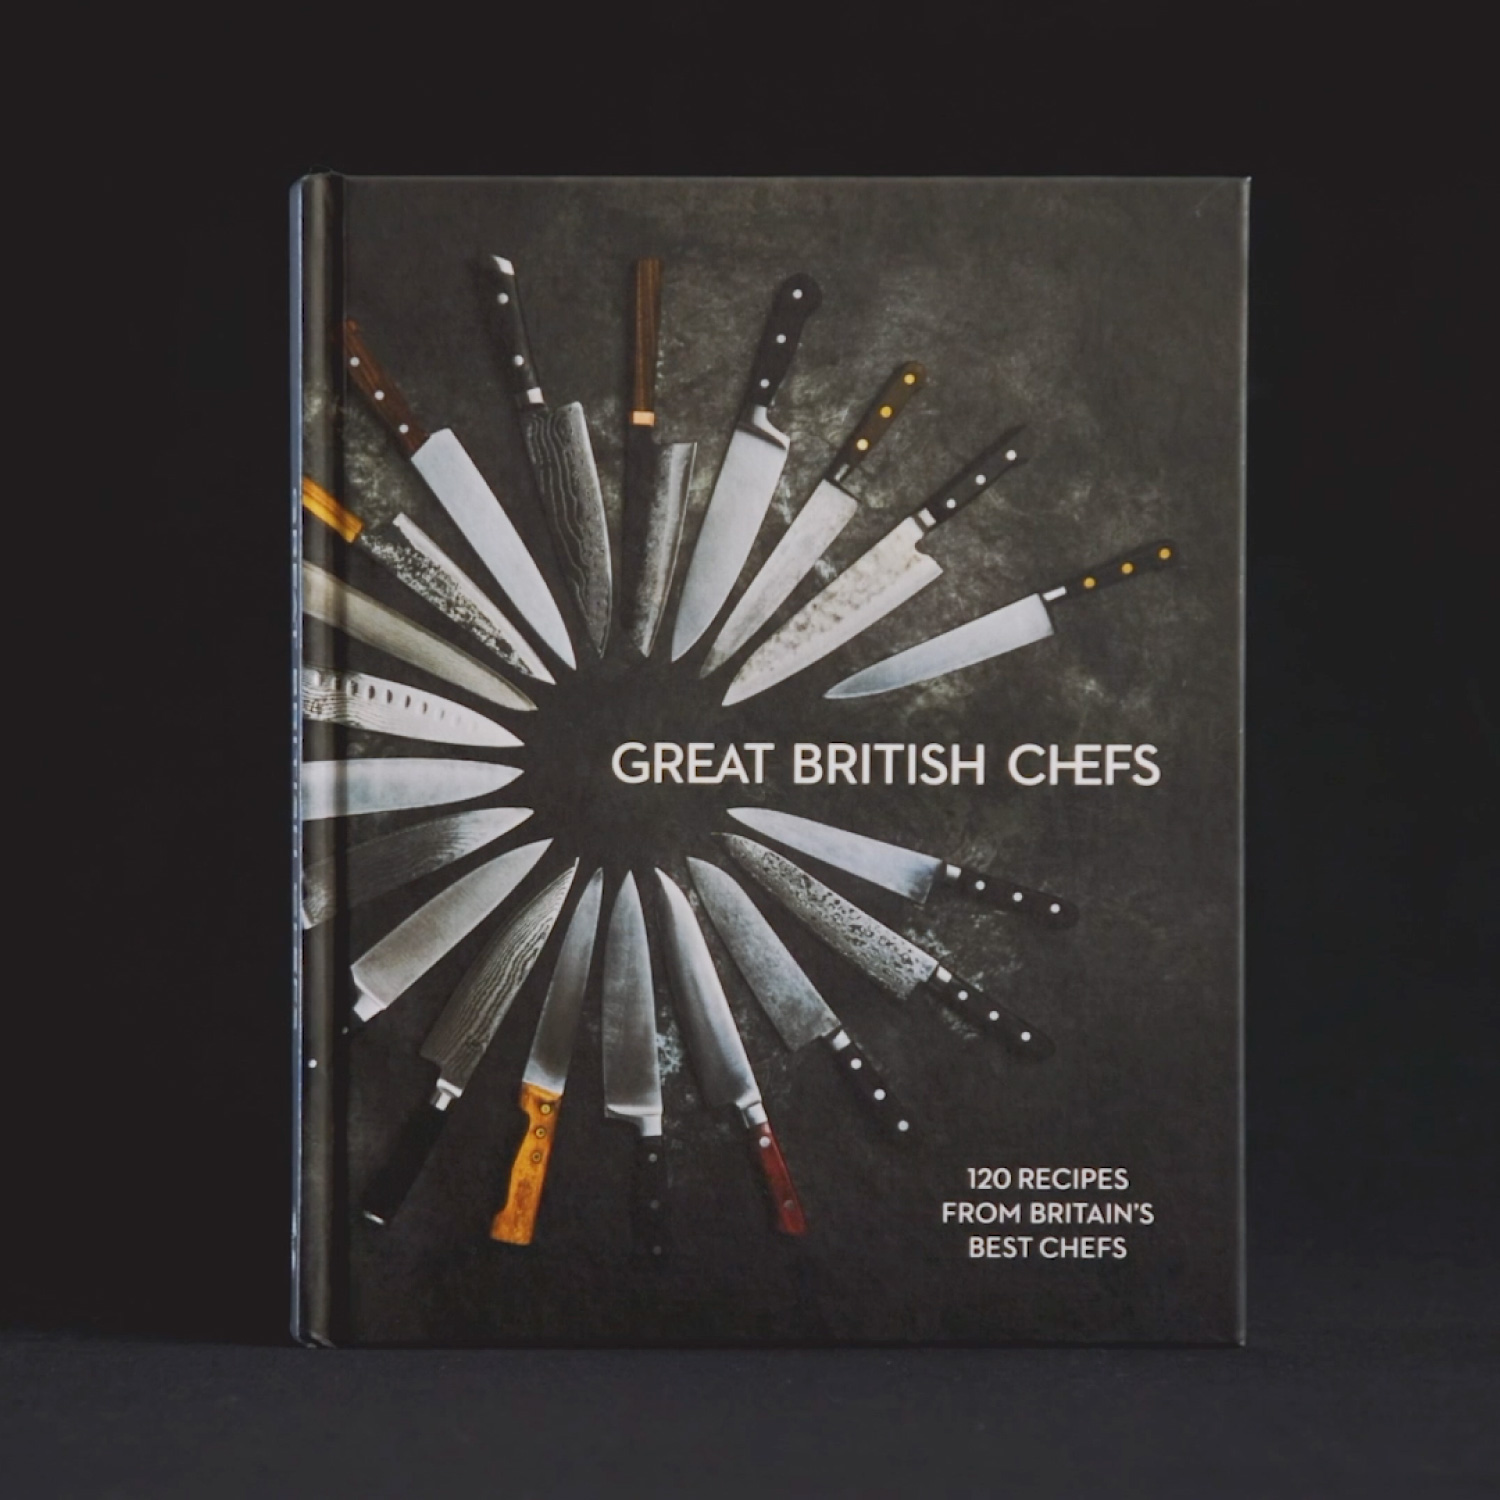 Great British Chefs book cover design